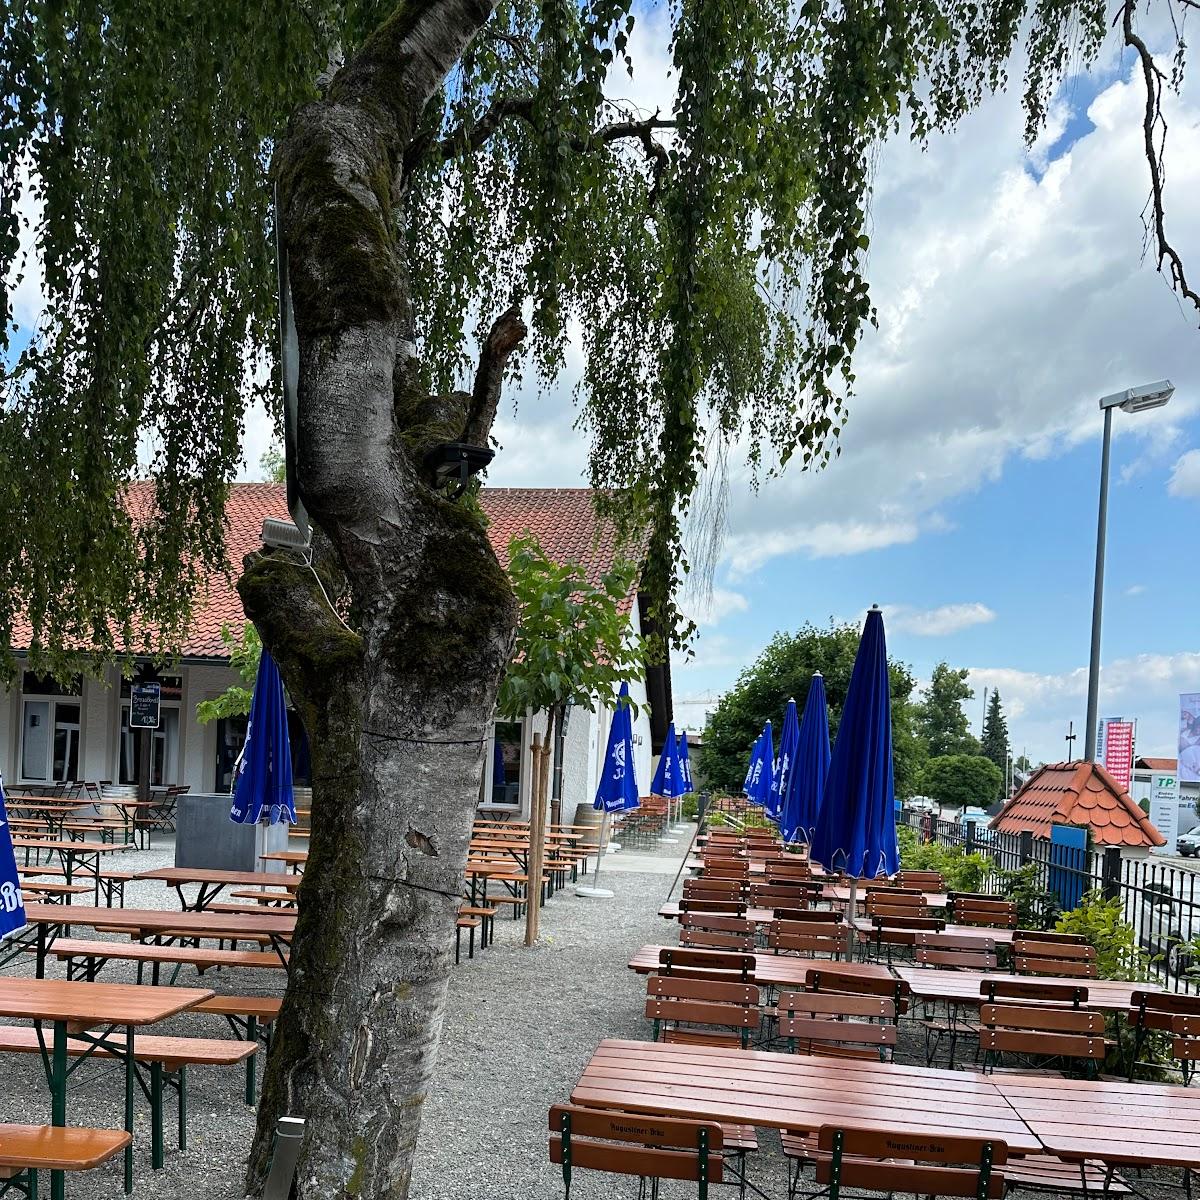 Restaurant "Bierhaus" in Simbach am Inn